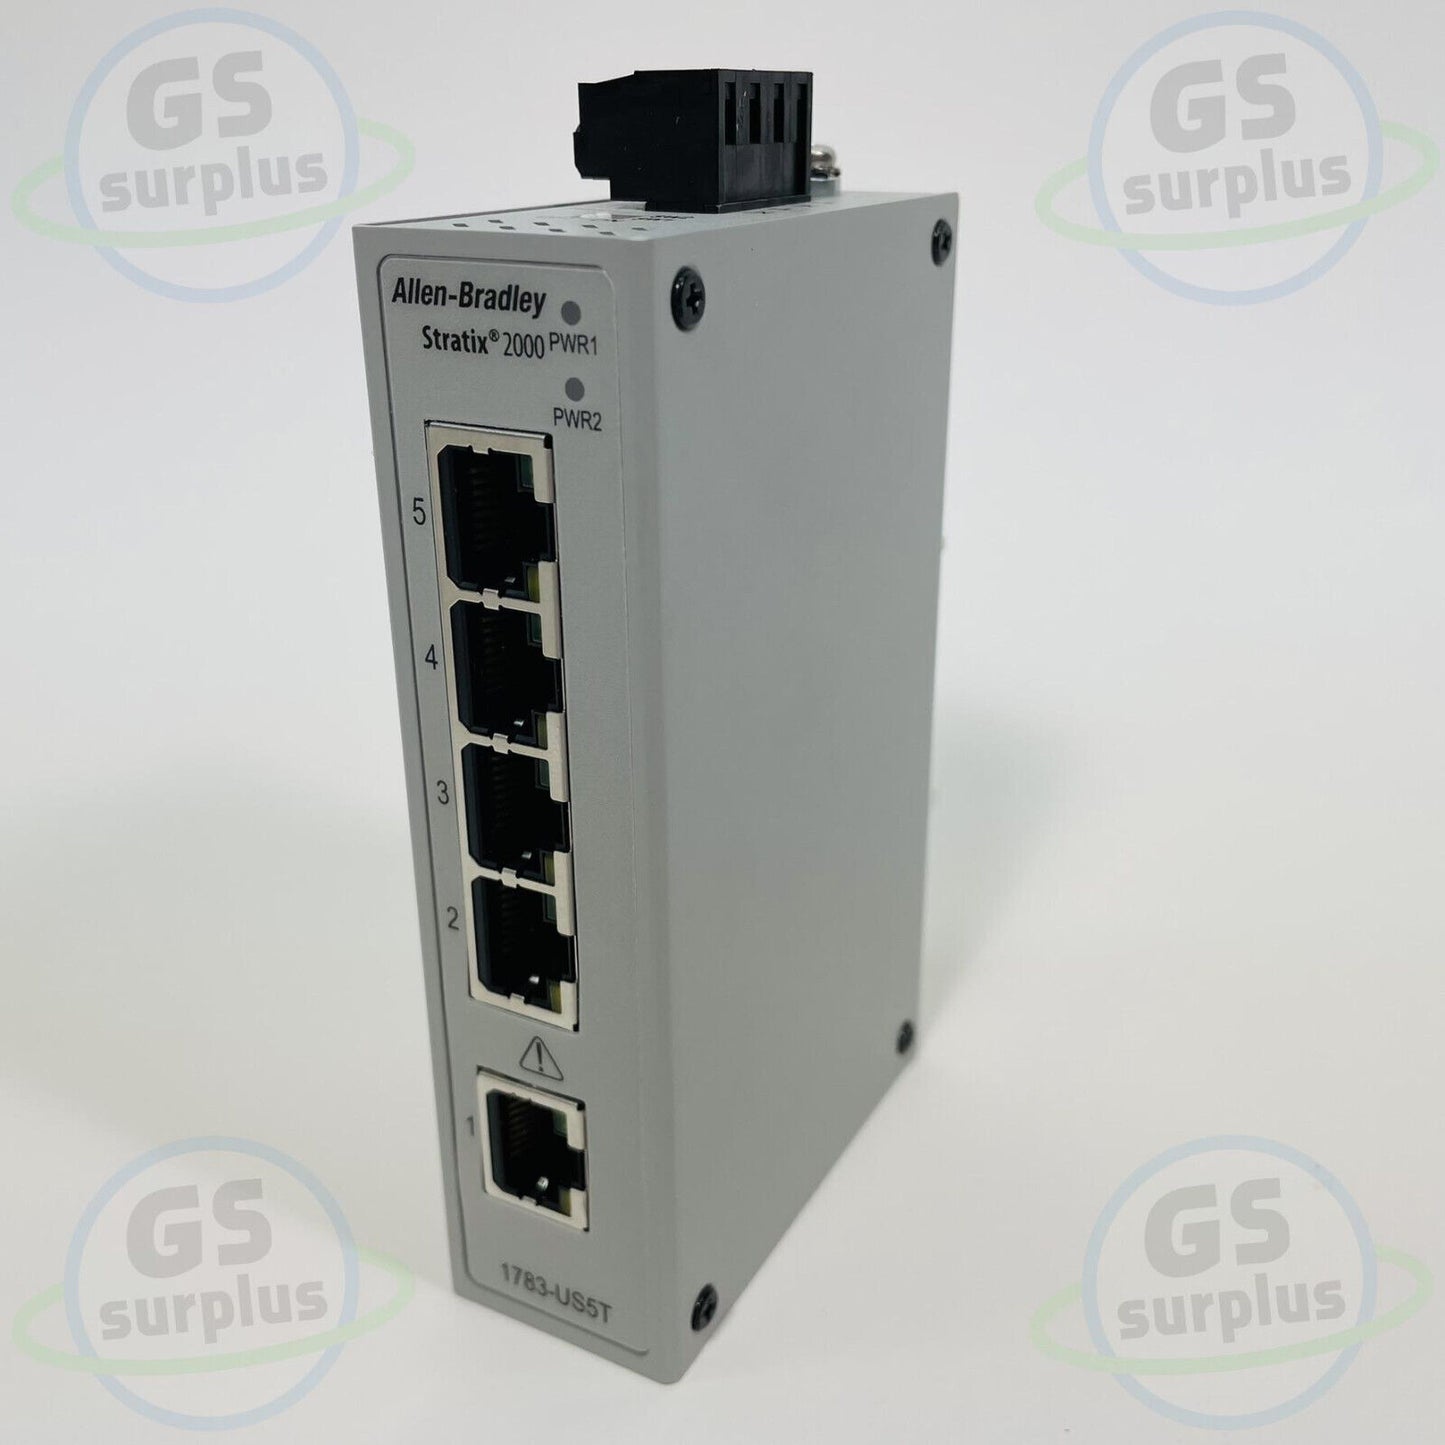 New Allen Bradley 1783-US5T /A Stratix 2000 Ethernet Switch 1783US5T